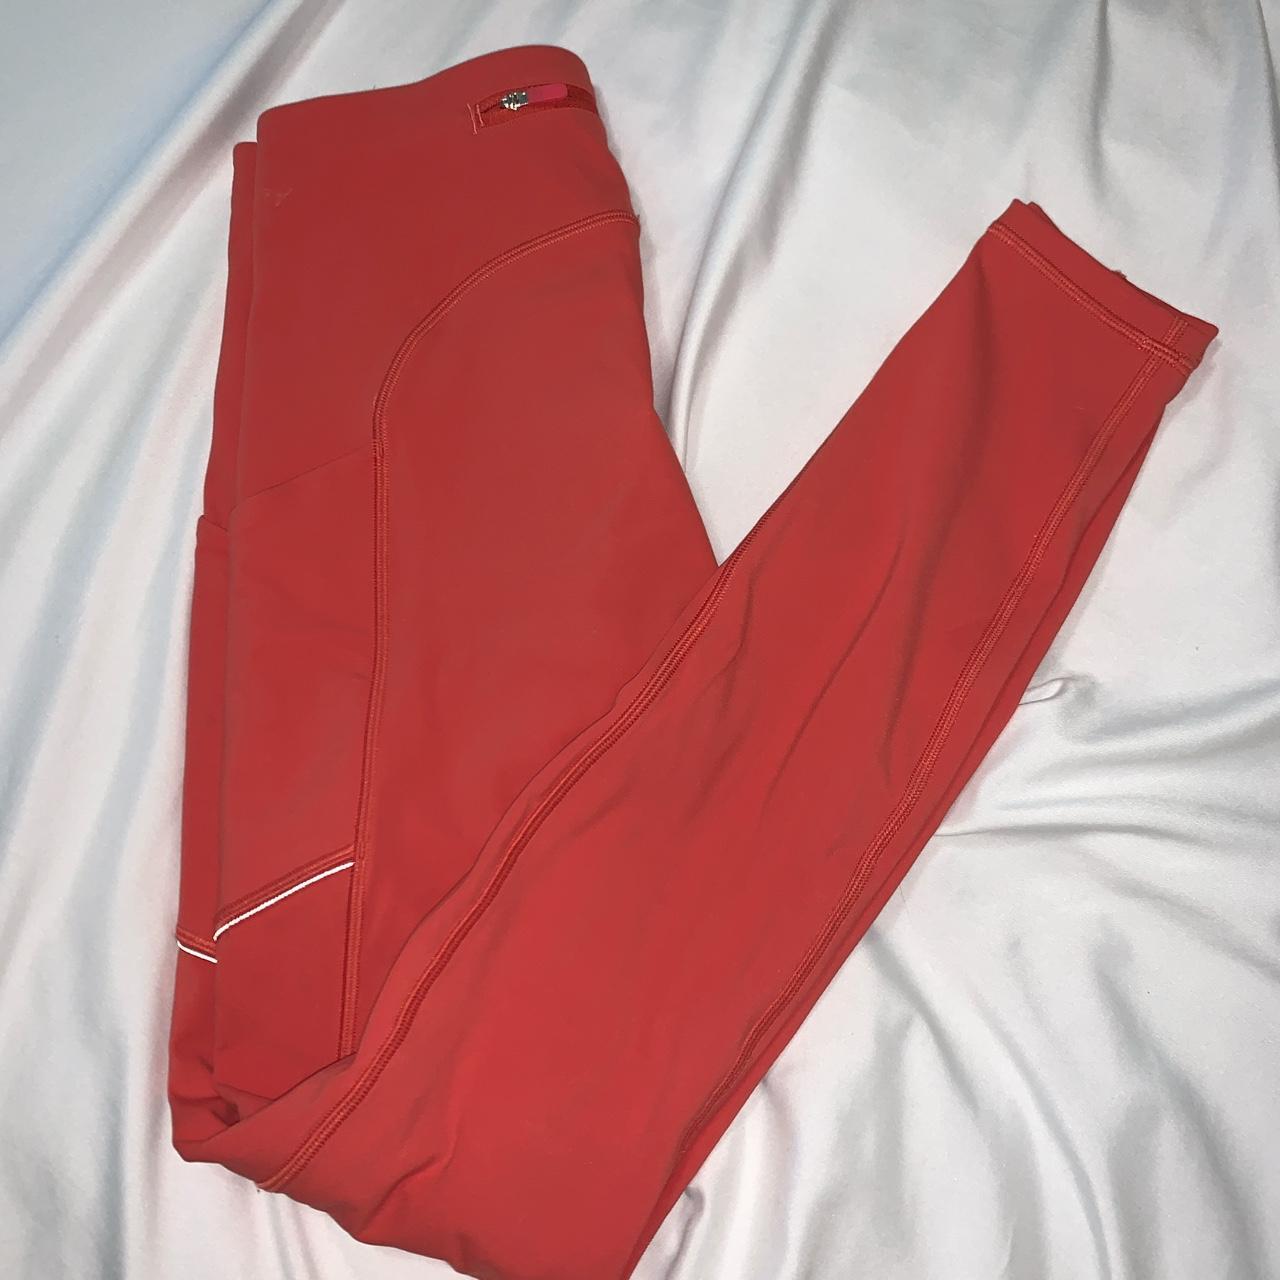 Coral Lululemon leggings. High impact, side pockets